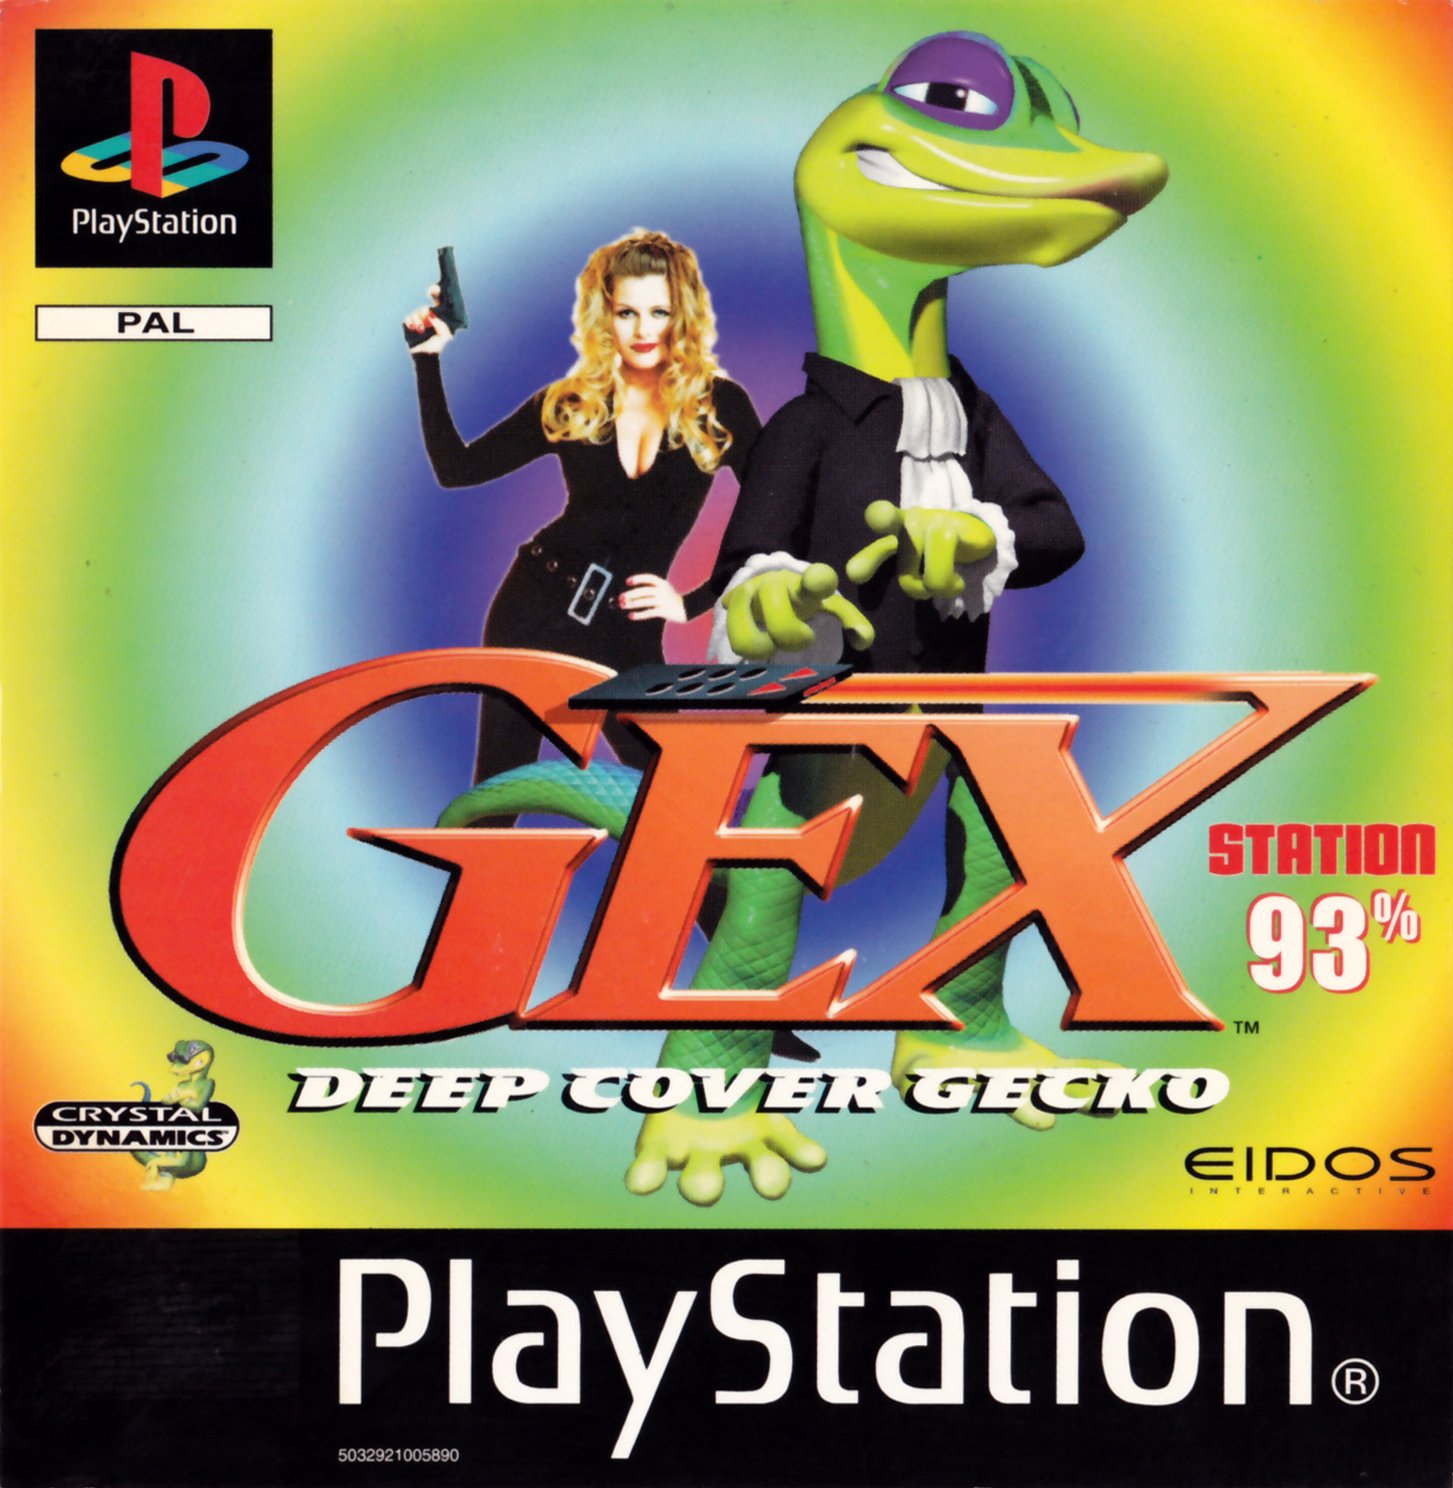 Gex 3: Deep Cover Gecko